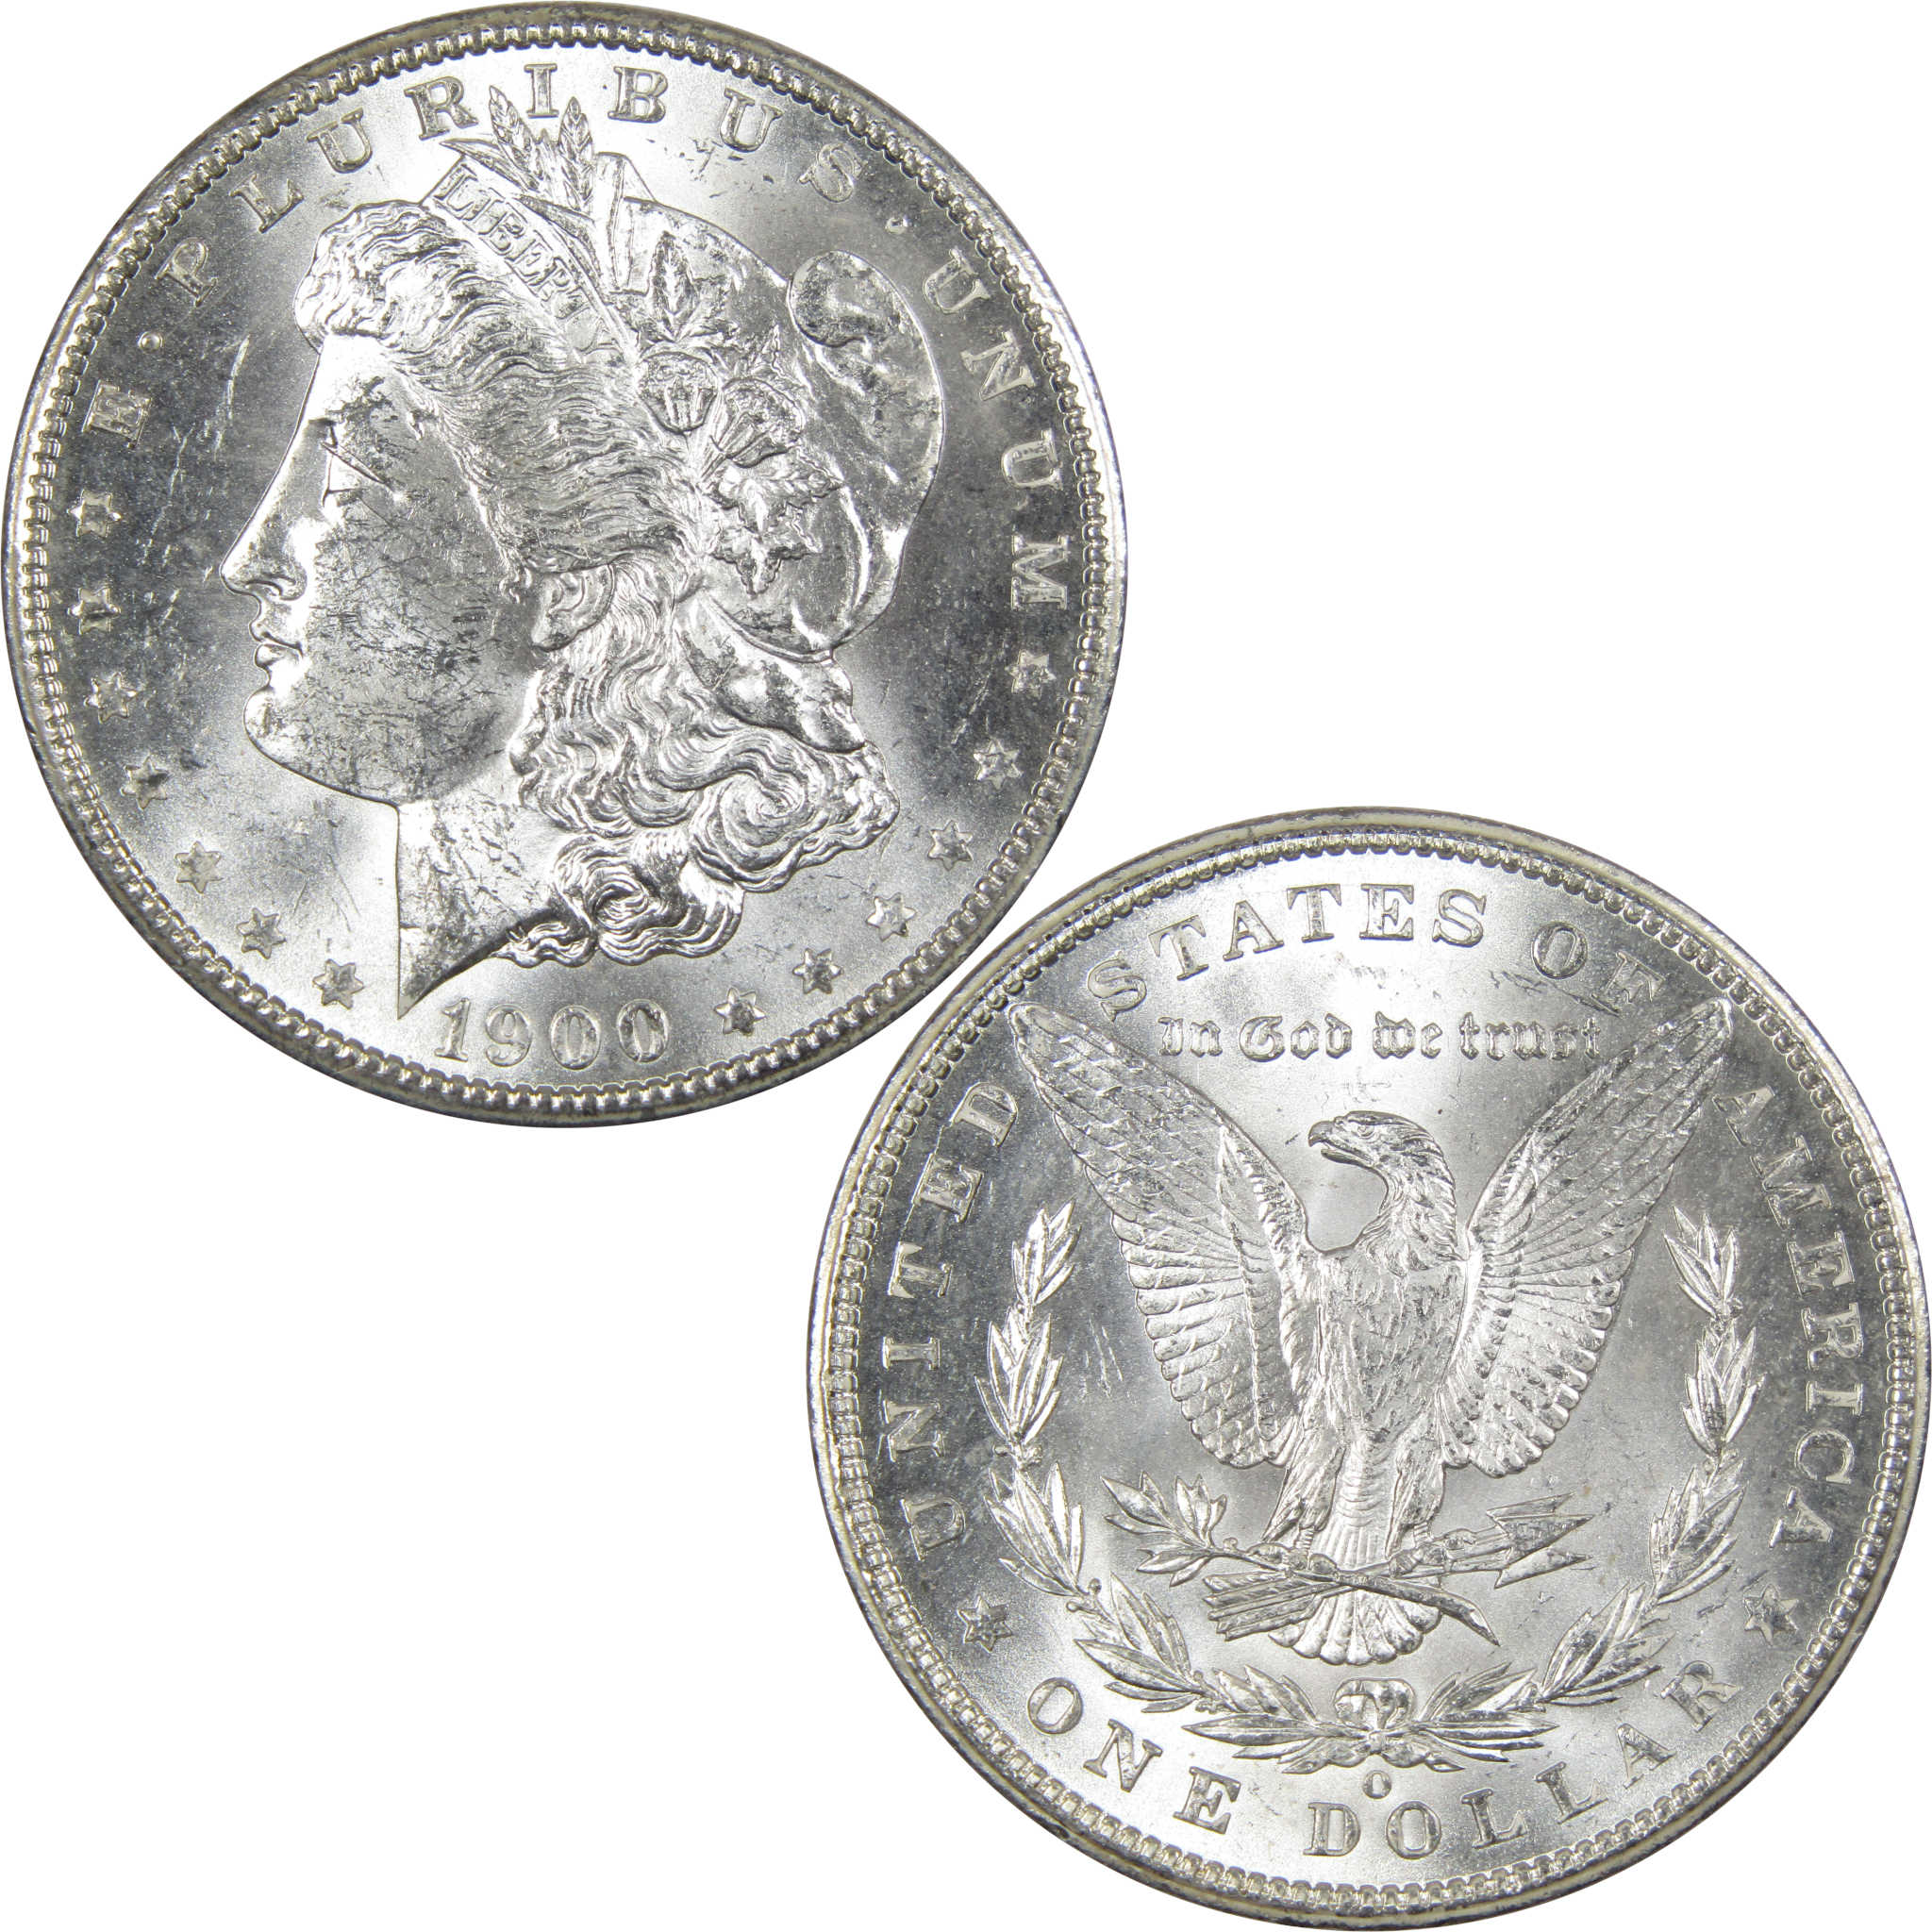 1900 O Morgan Dollar BU Uncirculated Mint State 90% Silver SKU:IPC9767 - Morgan coin - Morgan silver dollar - Morgan silver dollar for sale - Profile Coins &amp; Collectibles